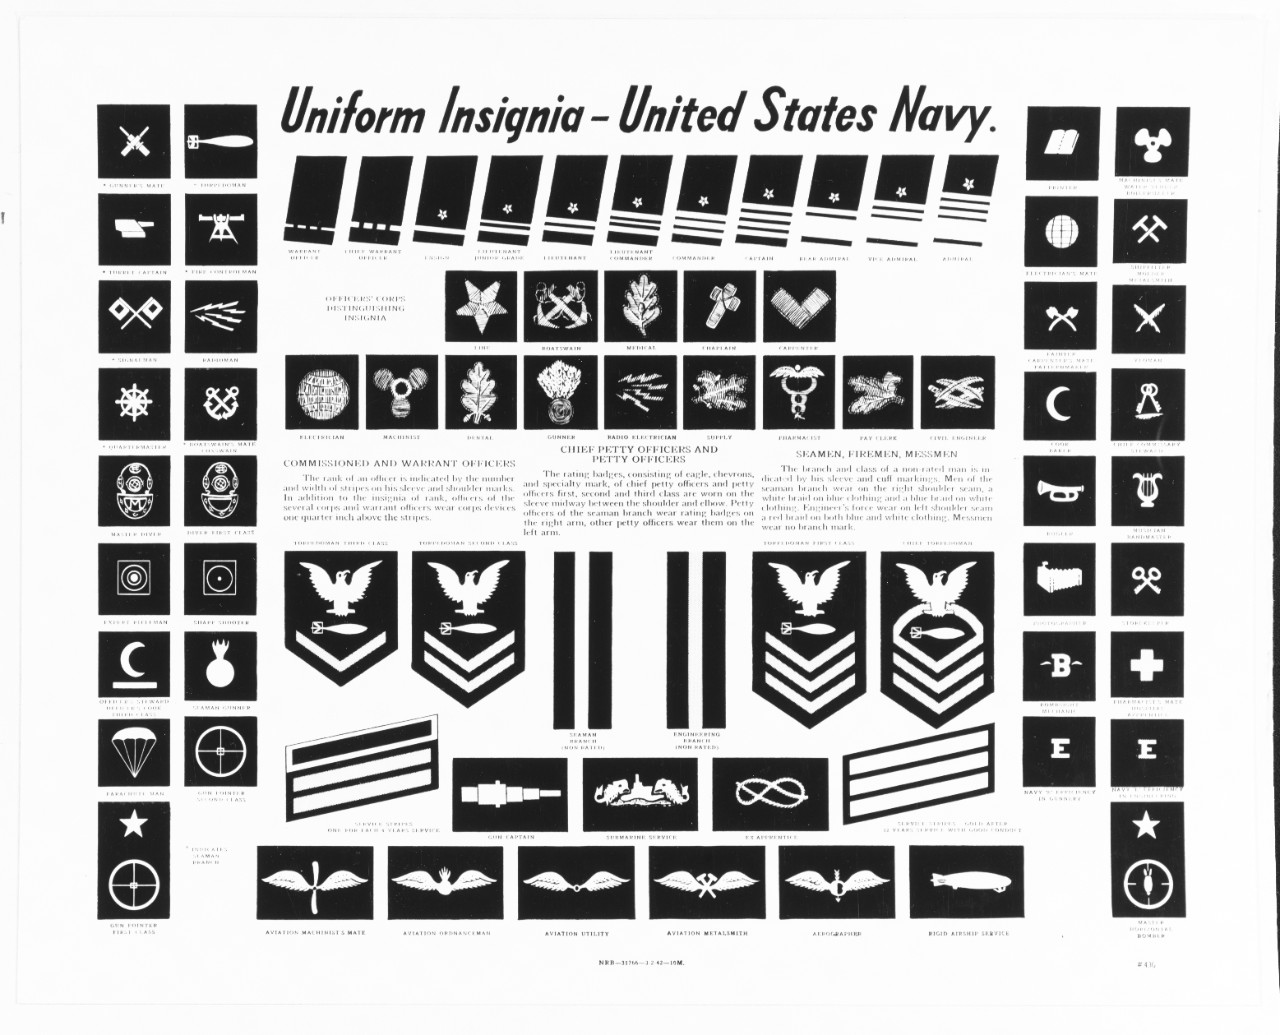 Navy poster, "Uniform Insignia"